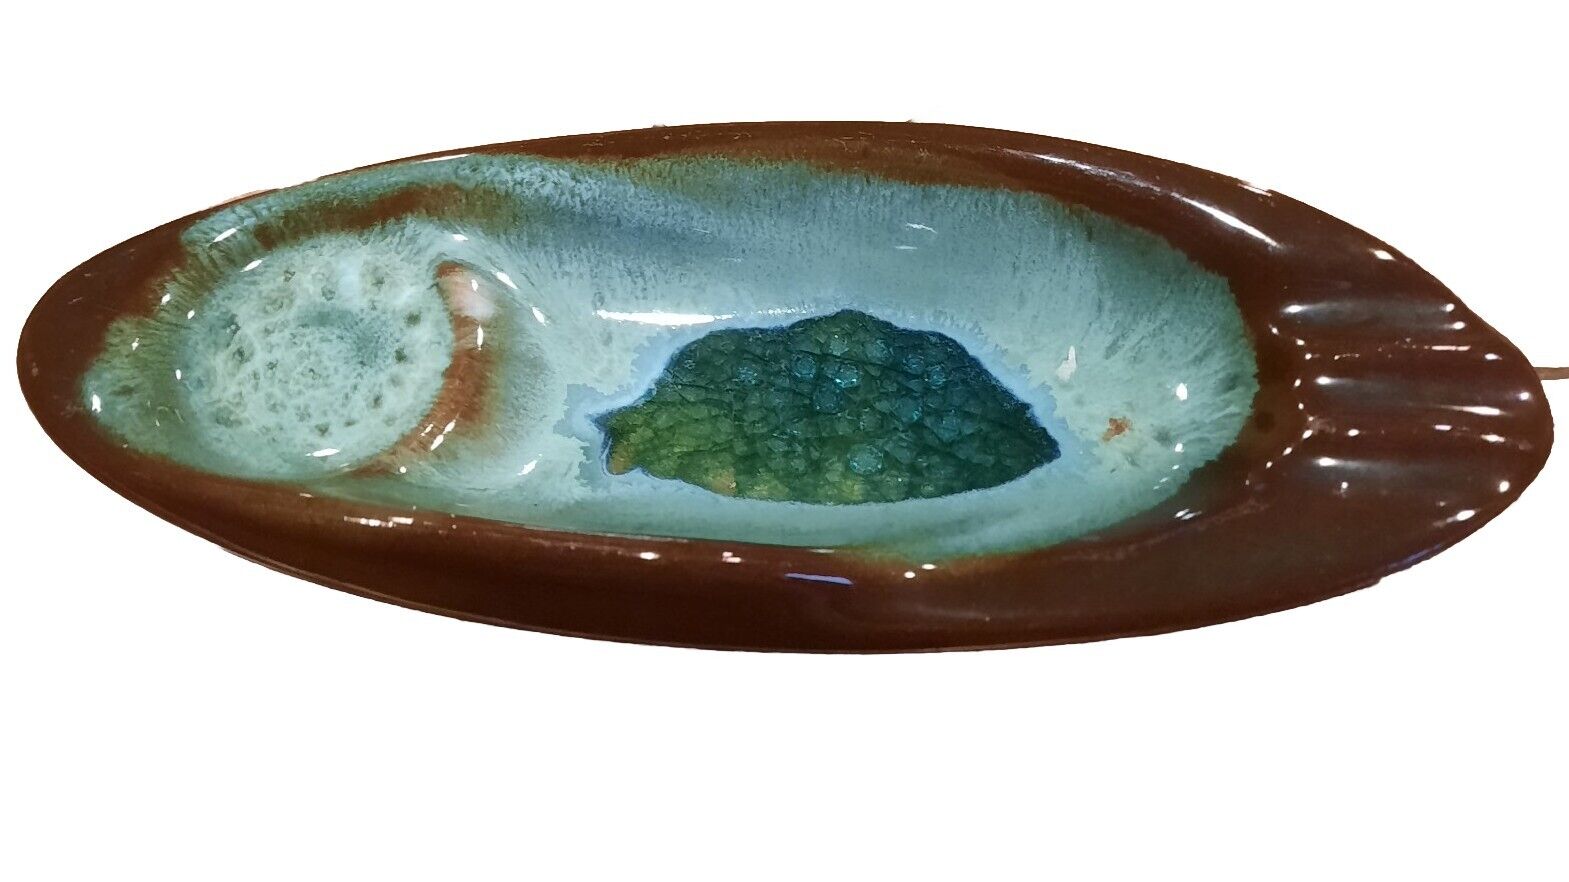 Vtg Retro MCM Pottery Ashtray Ceramic Decorative Bowl Brown and Turquoise Glaze